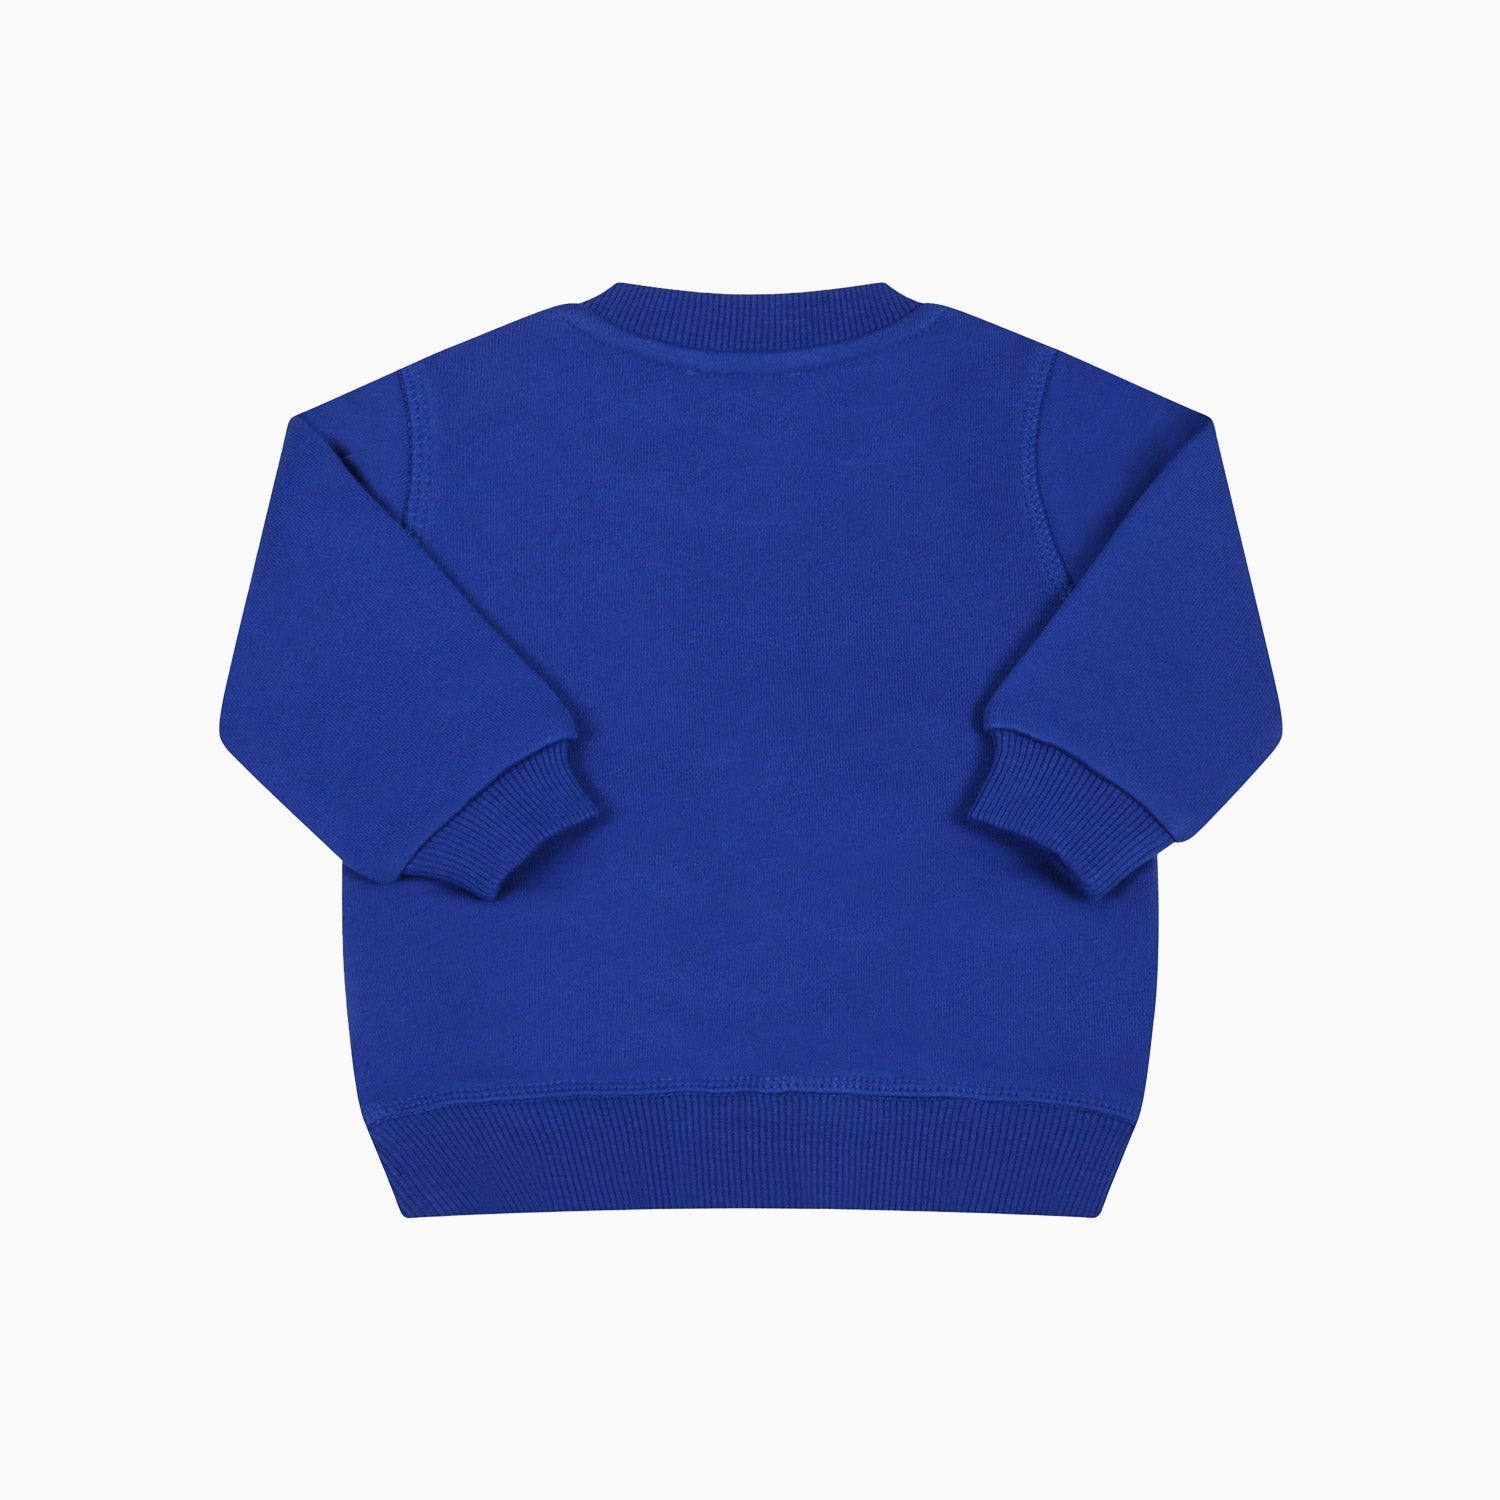 Kenzo Kid's Logo Crew Neck Sweatshirt - Color: Blue - Kids Premium Clothing -